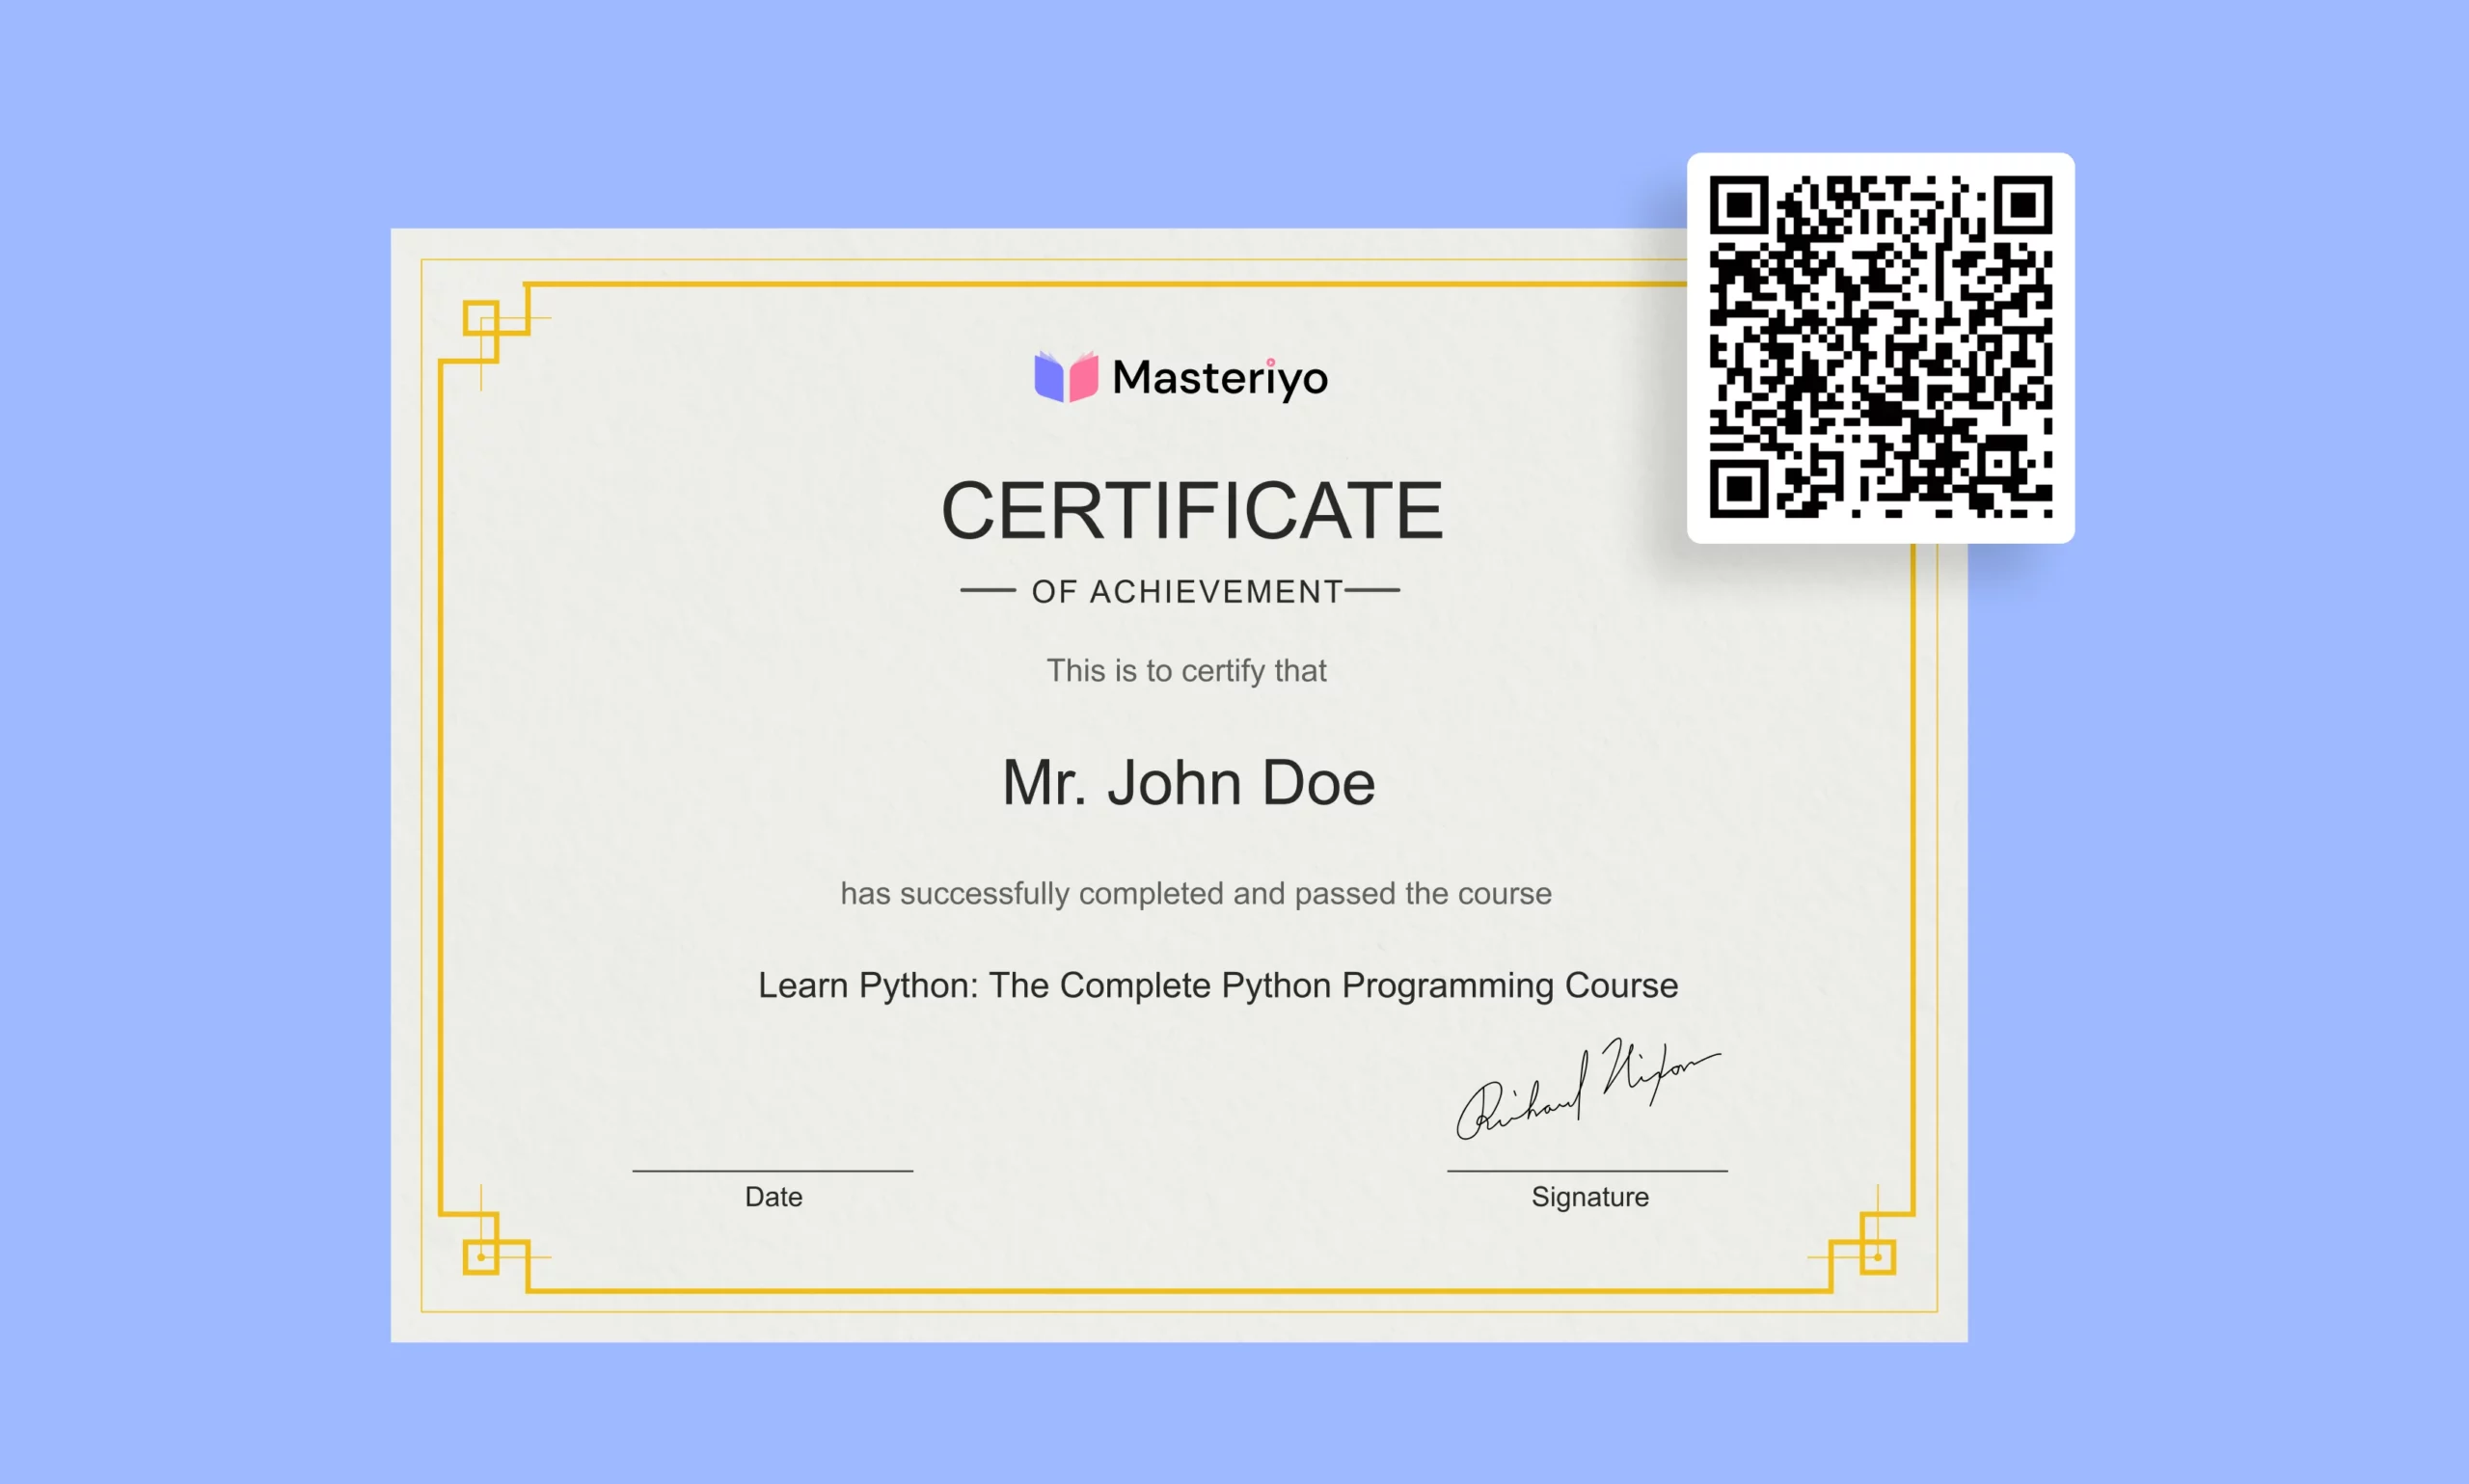 QR Verification for Certificate